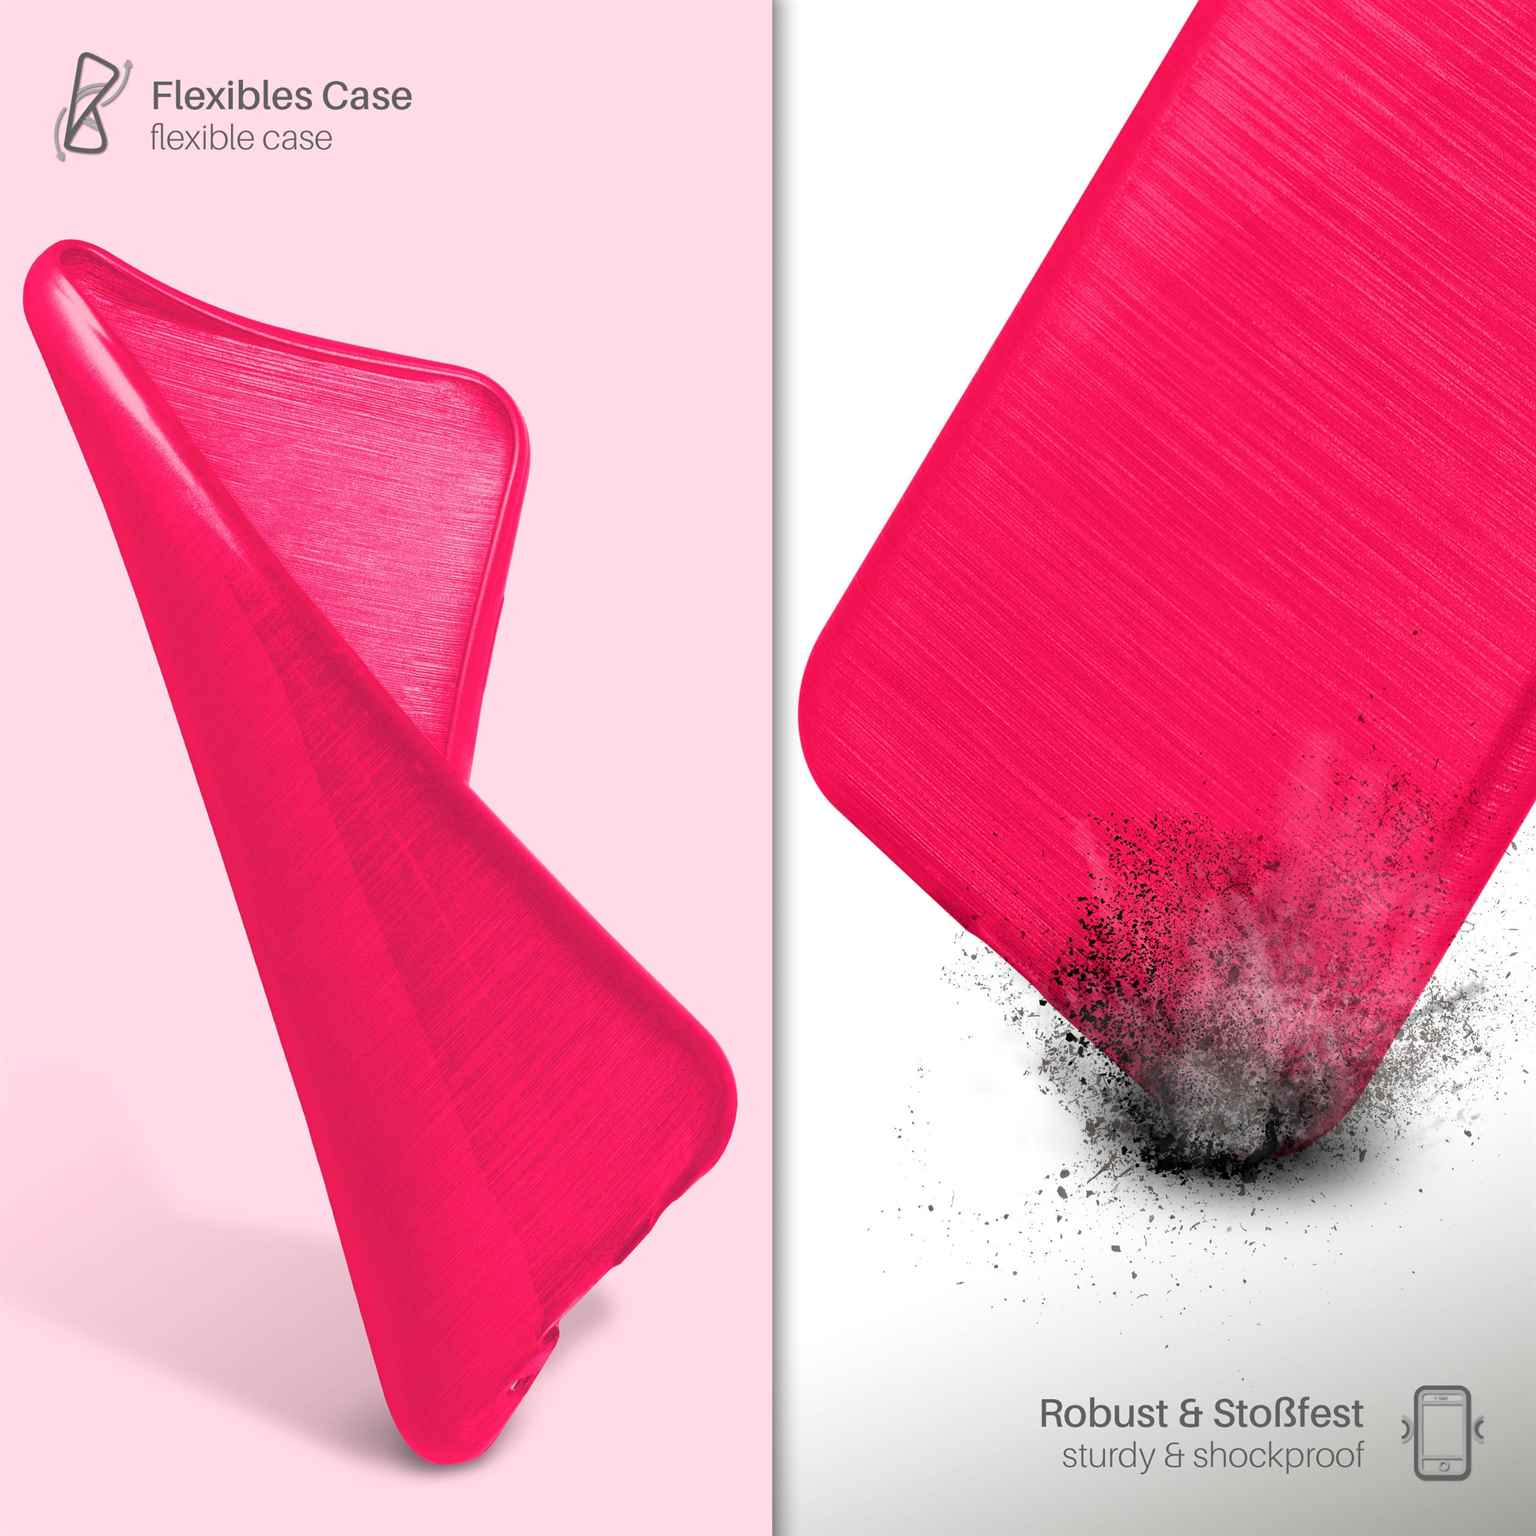 MOEX Brushed Case, Backcover, Apple, iPhone 8, Magenta-Pink